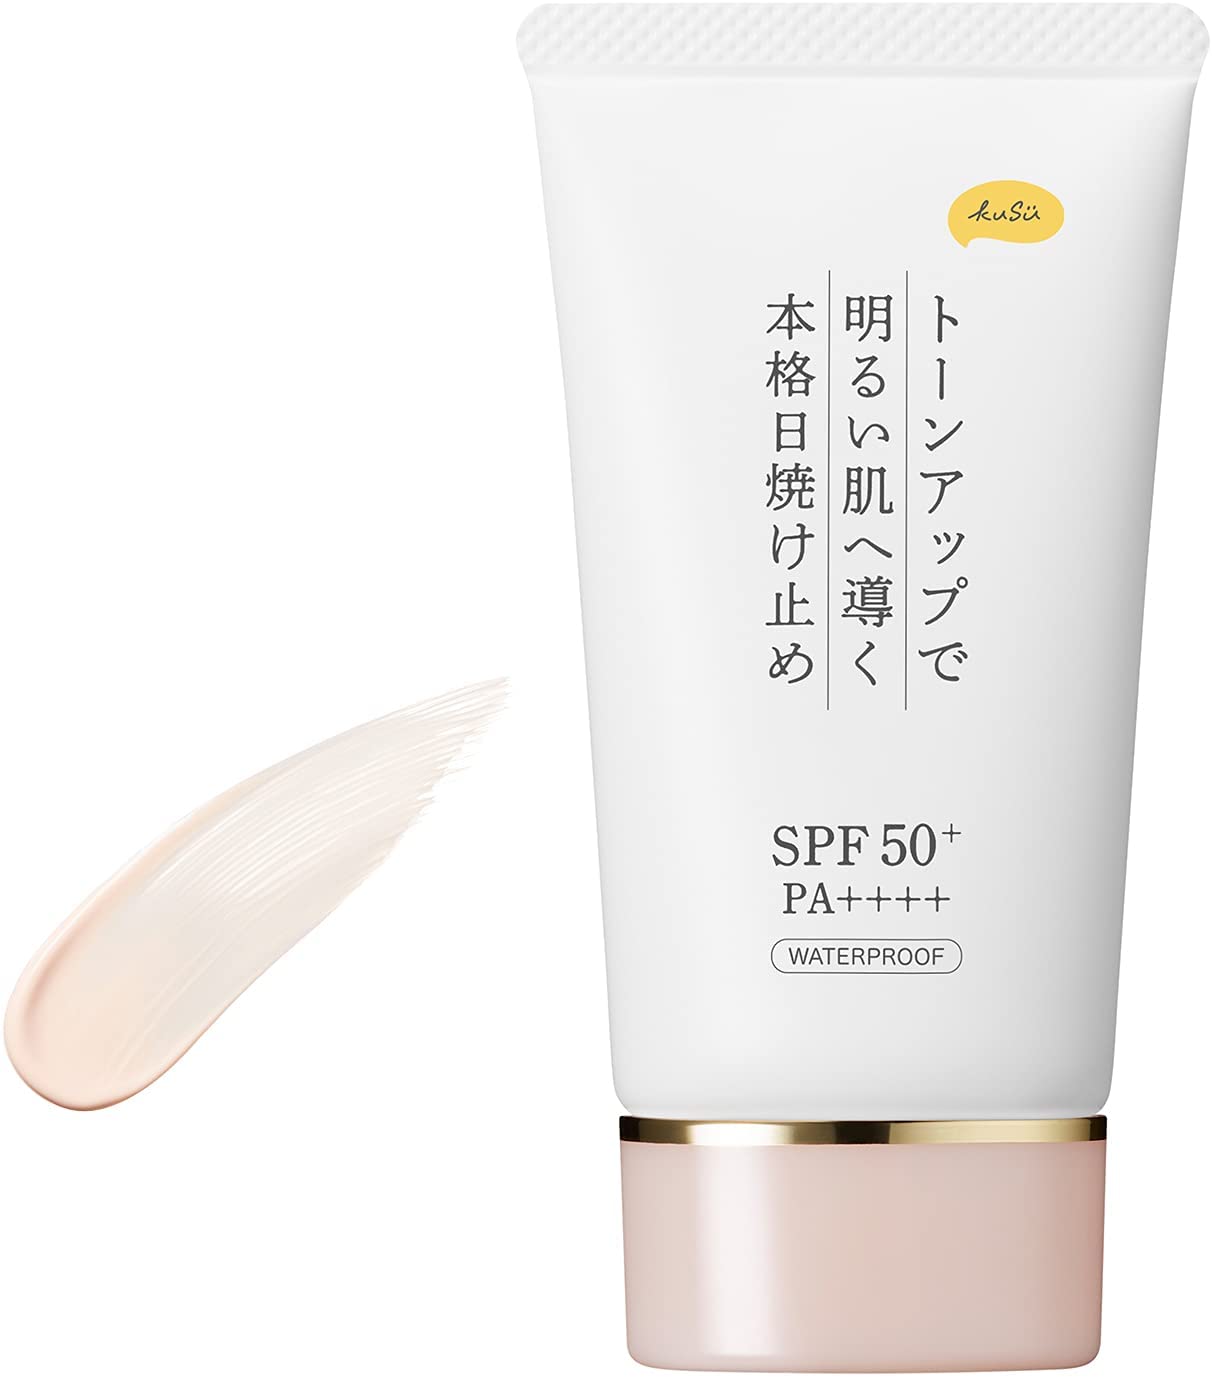 KuSu 提亮防曬妝前乳PP Pro SPF50+・PA++++ 40g